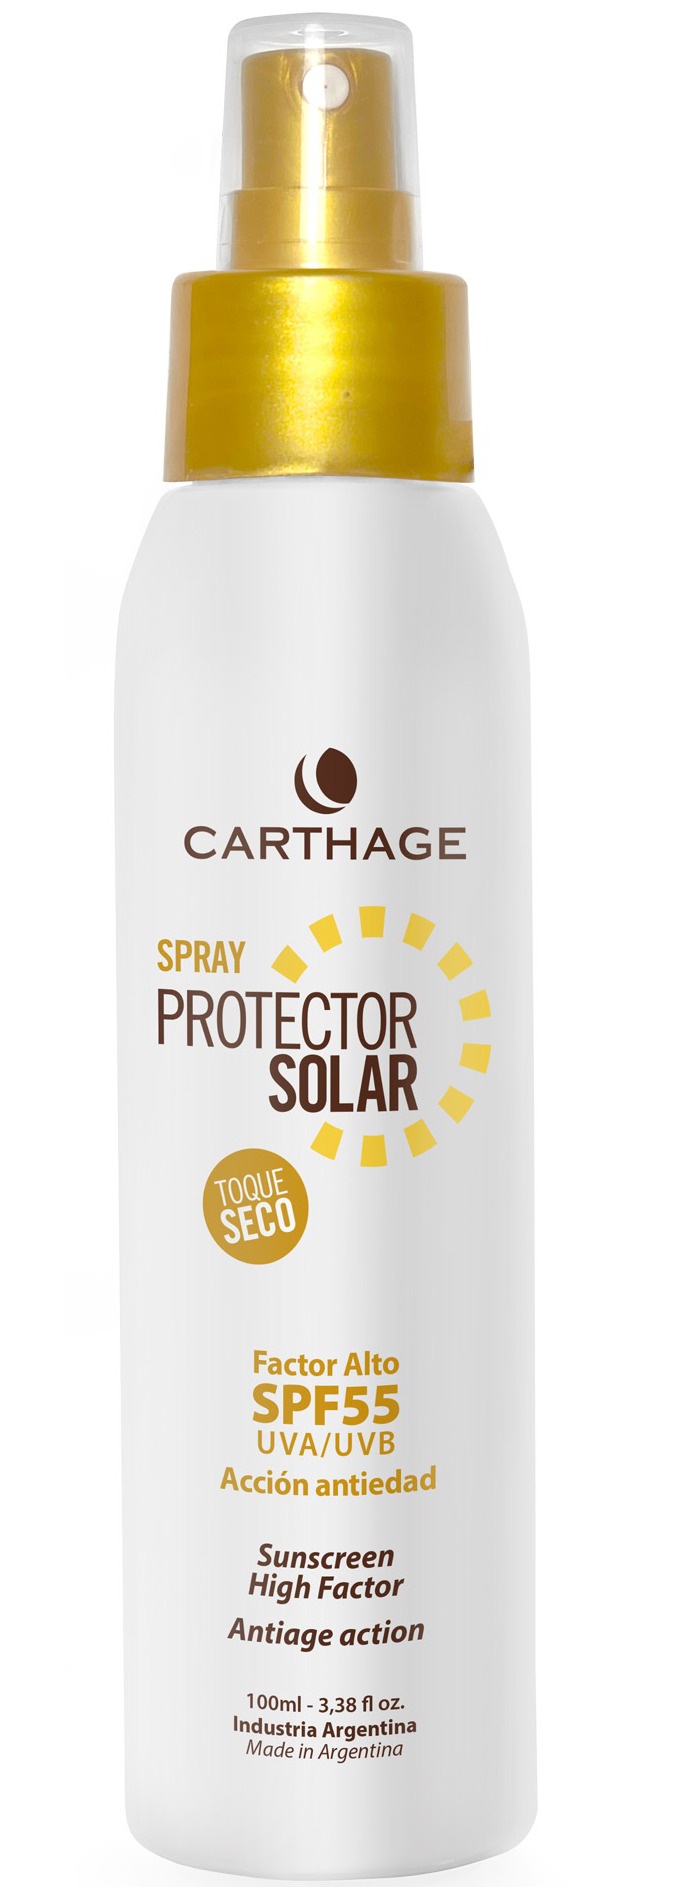 Carthage Spray Protector Solar SPF 55 Antiage Action